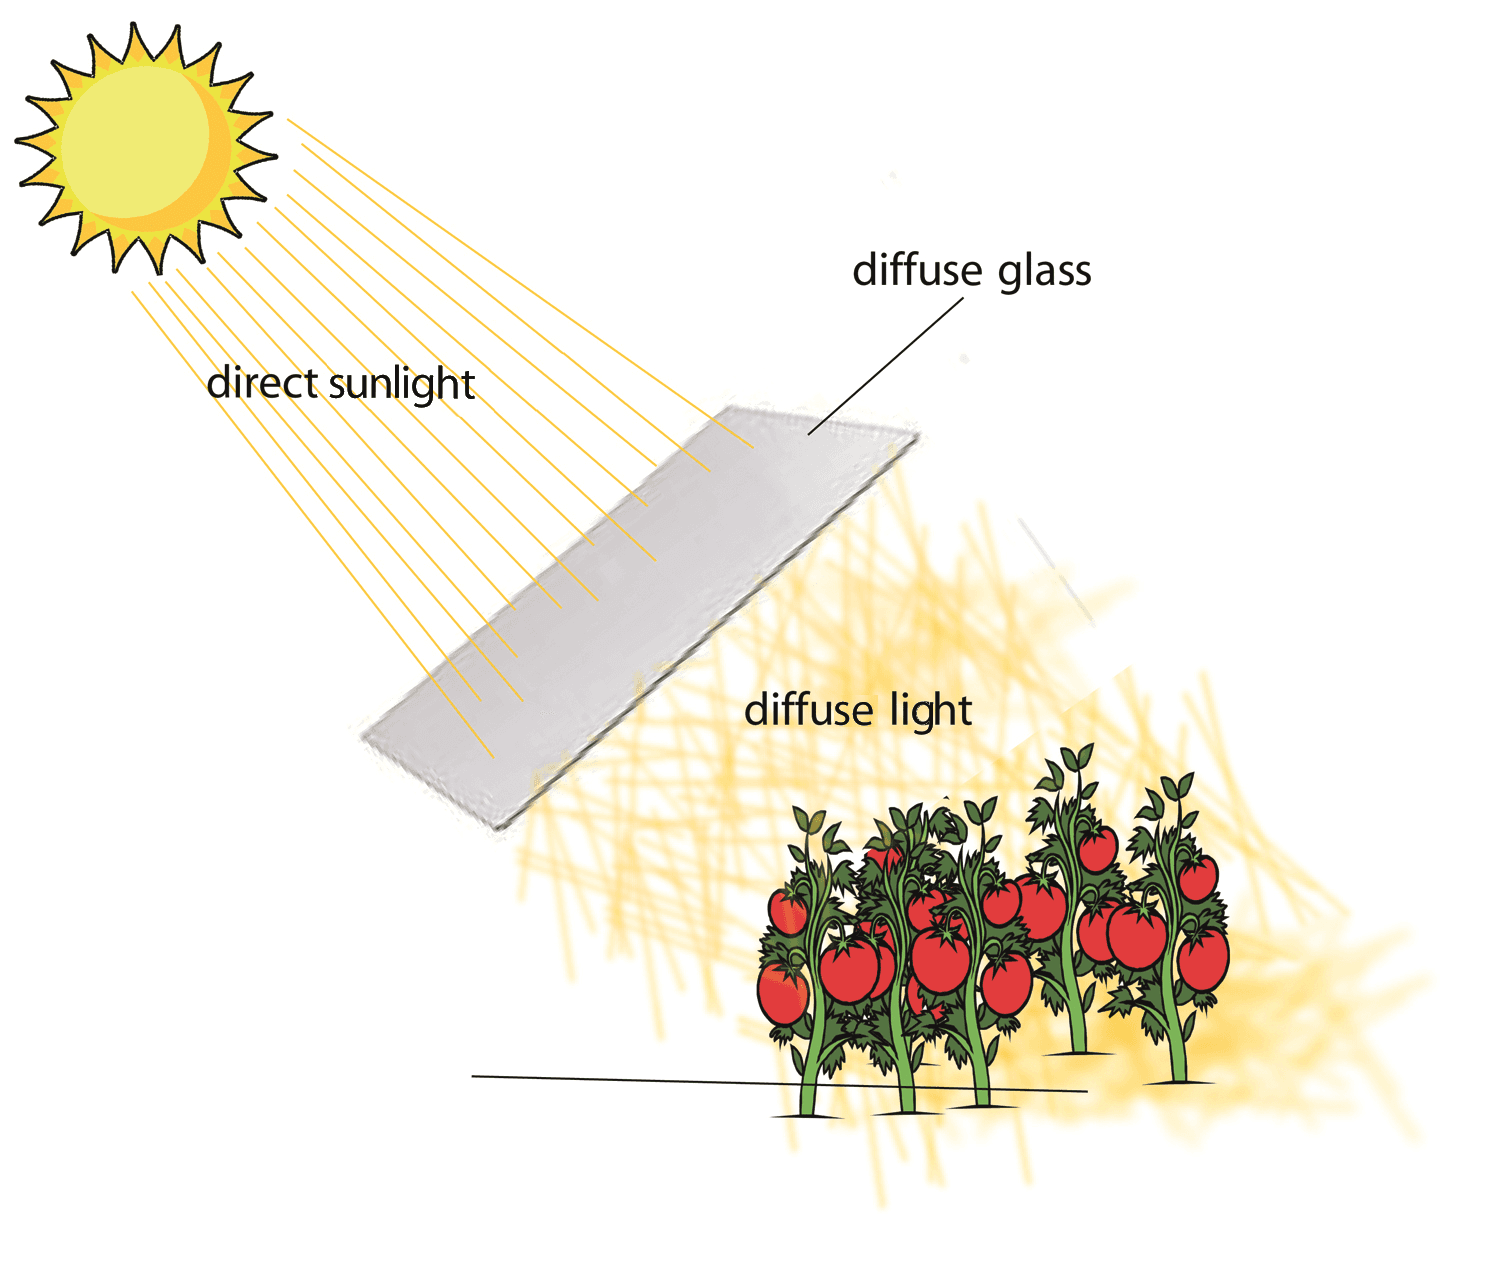 diffuse light